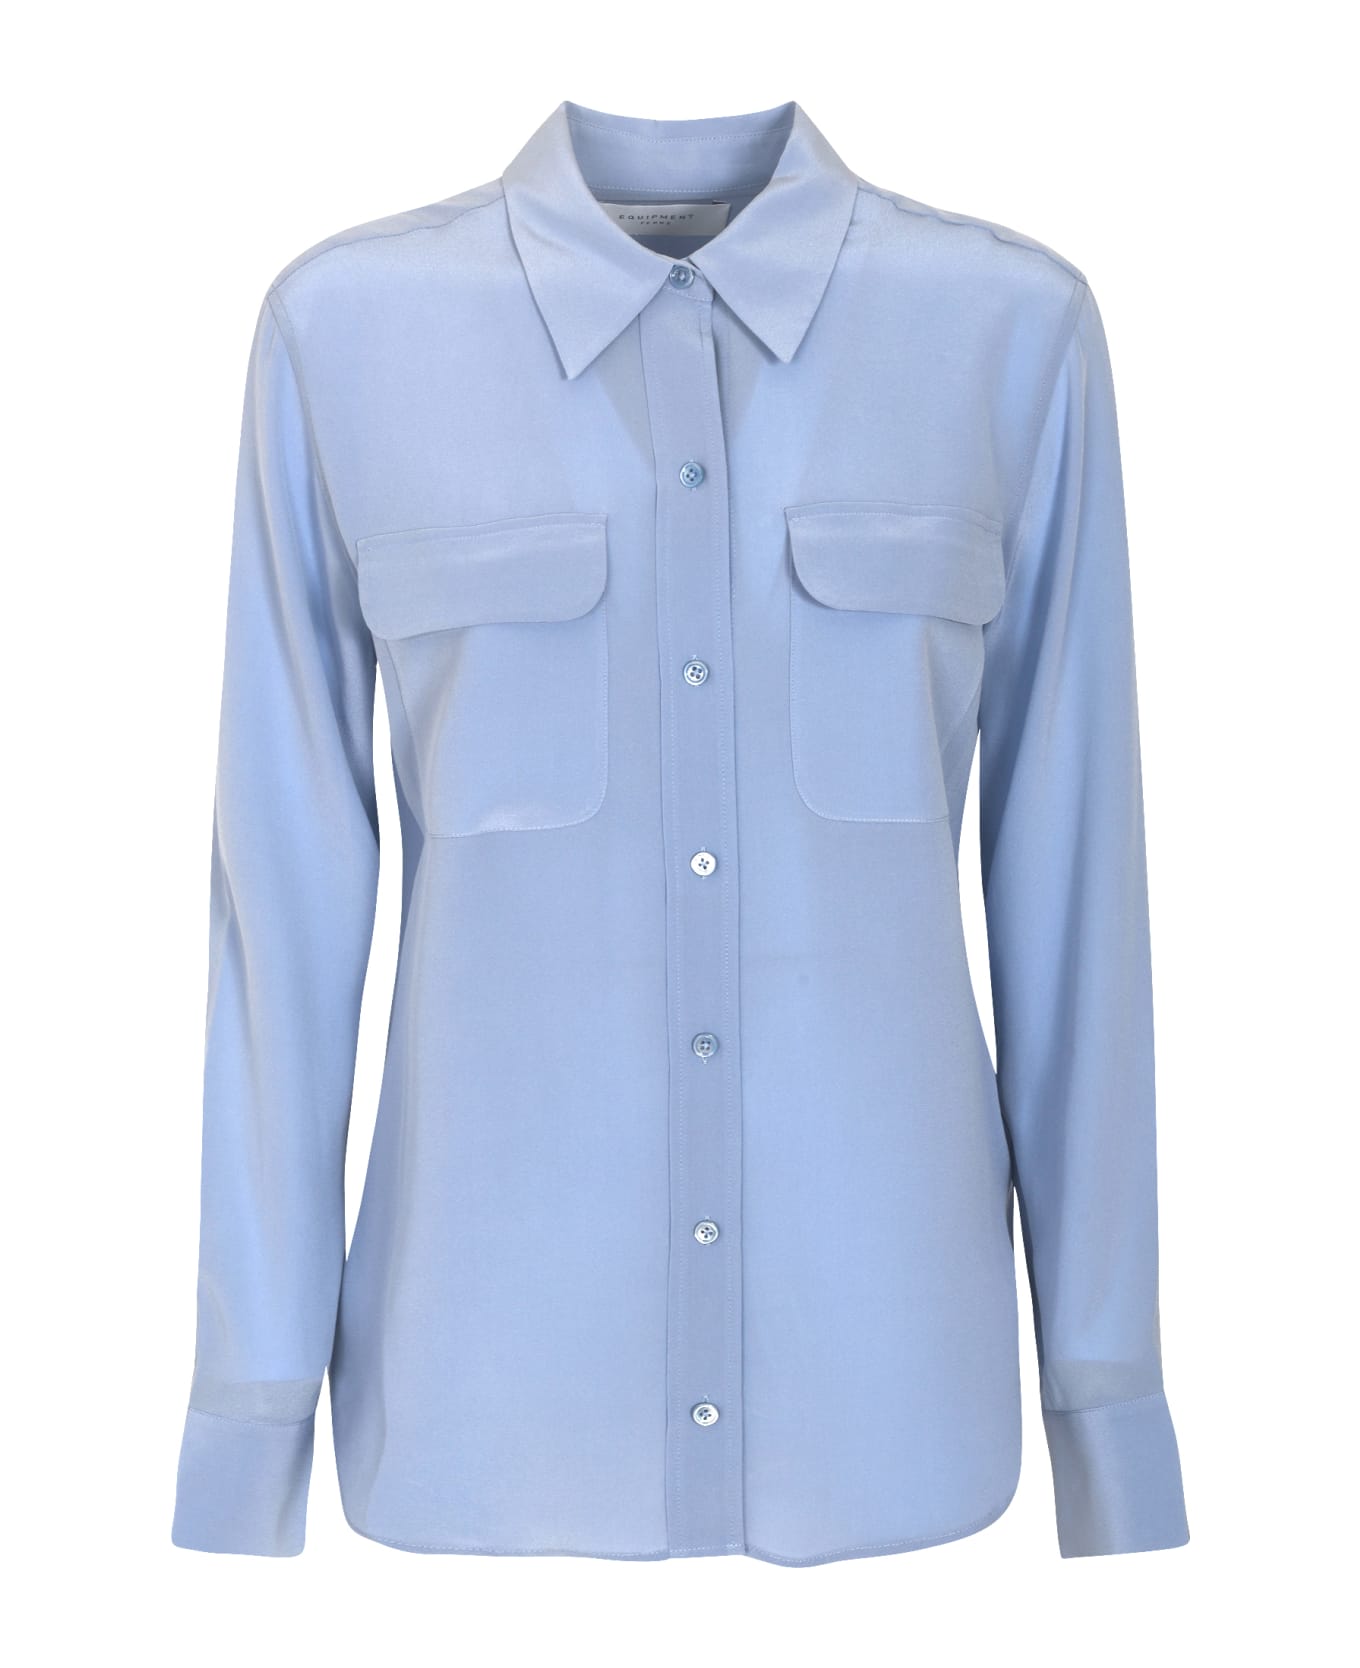 Equipment Round Hem Patched Pocket Plain Shirt - Forever Blue